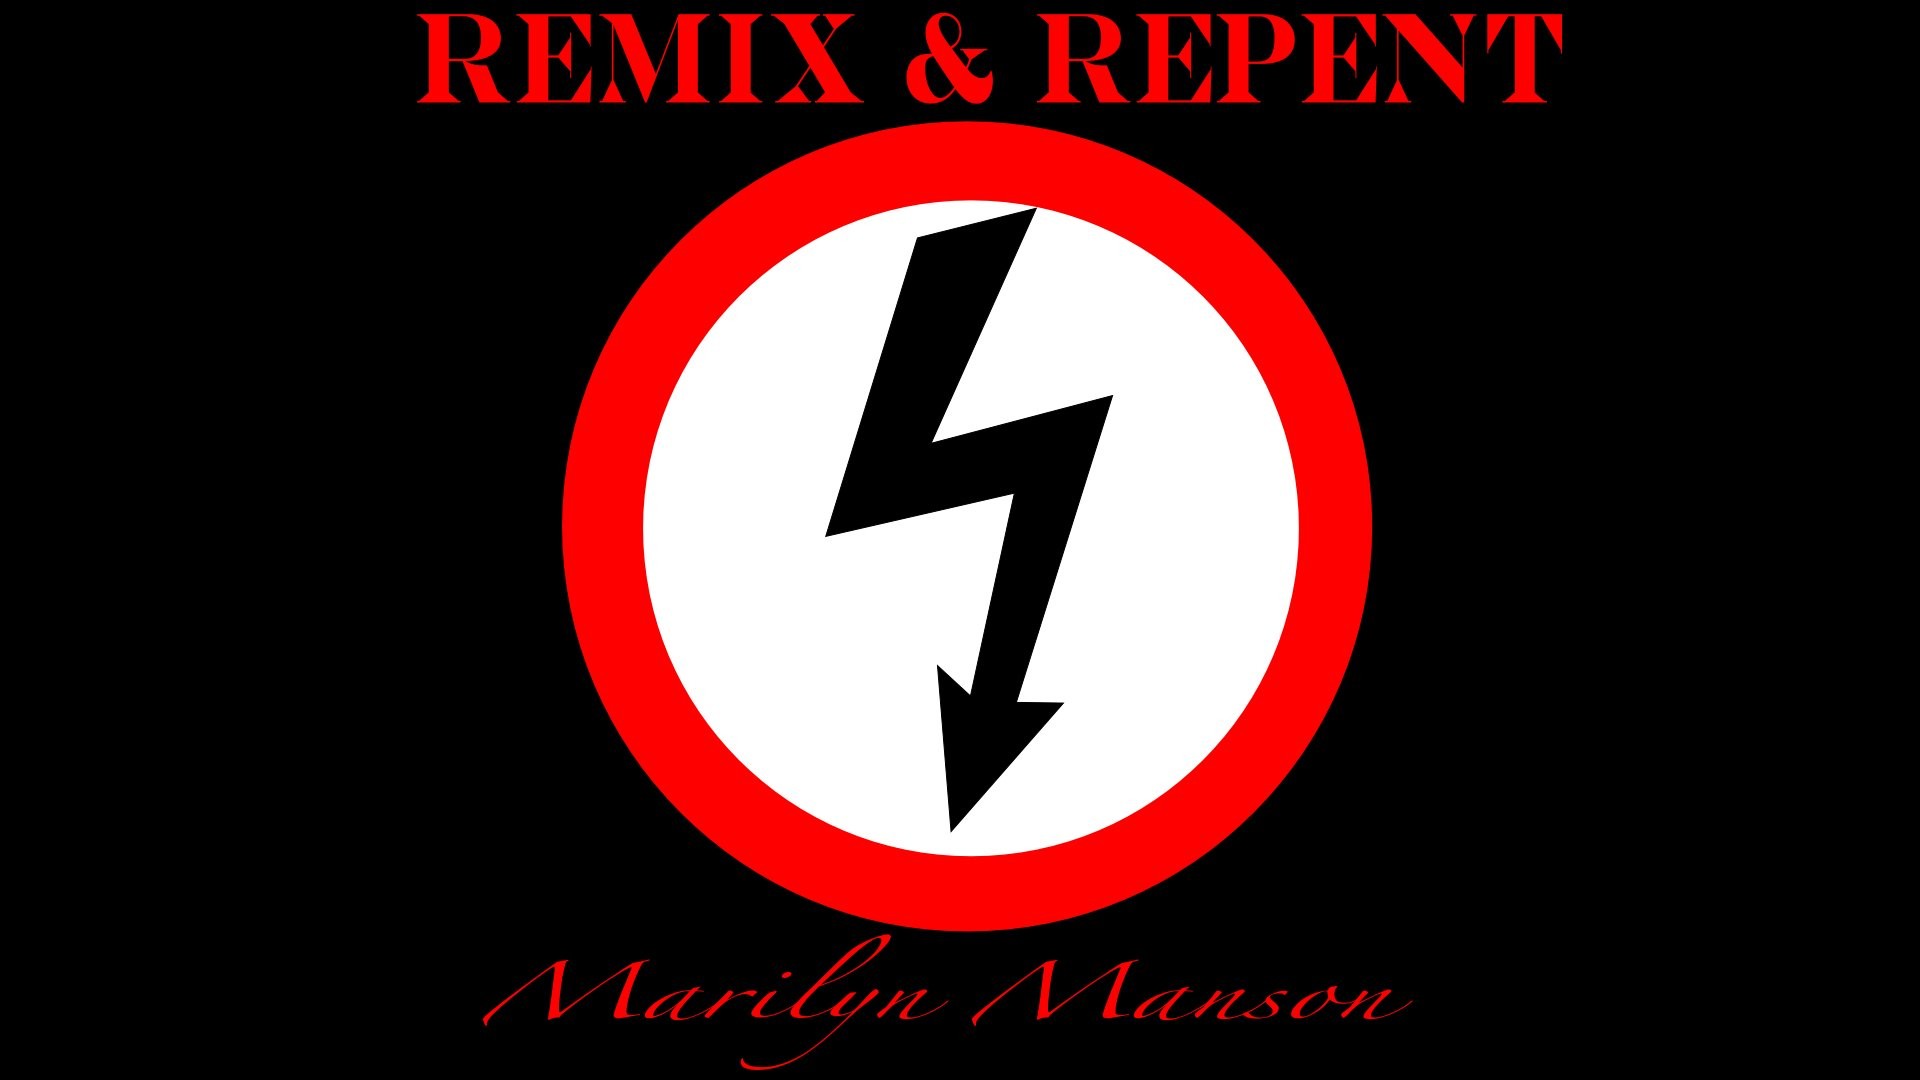 Music – Marilyn Manson Industrial Metal Heavy Metal Wallpaper